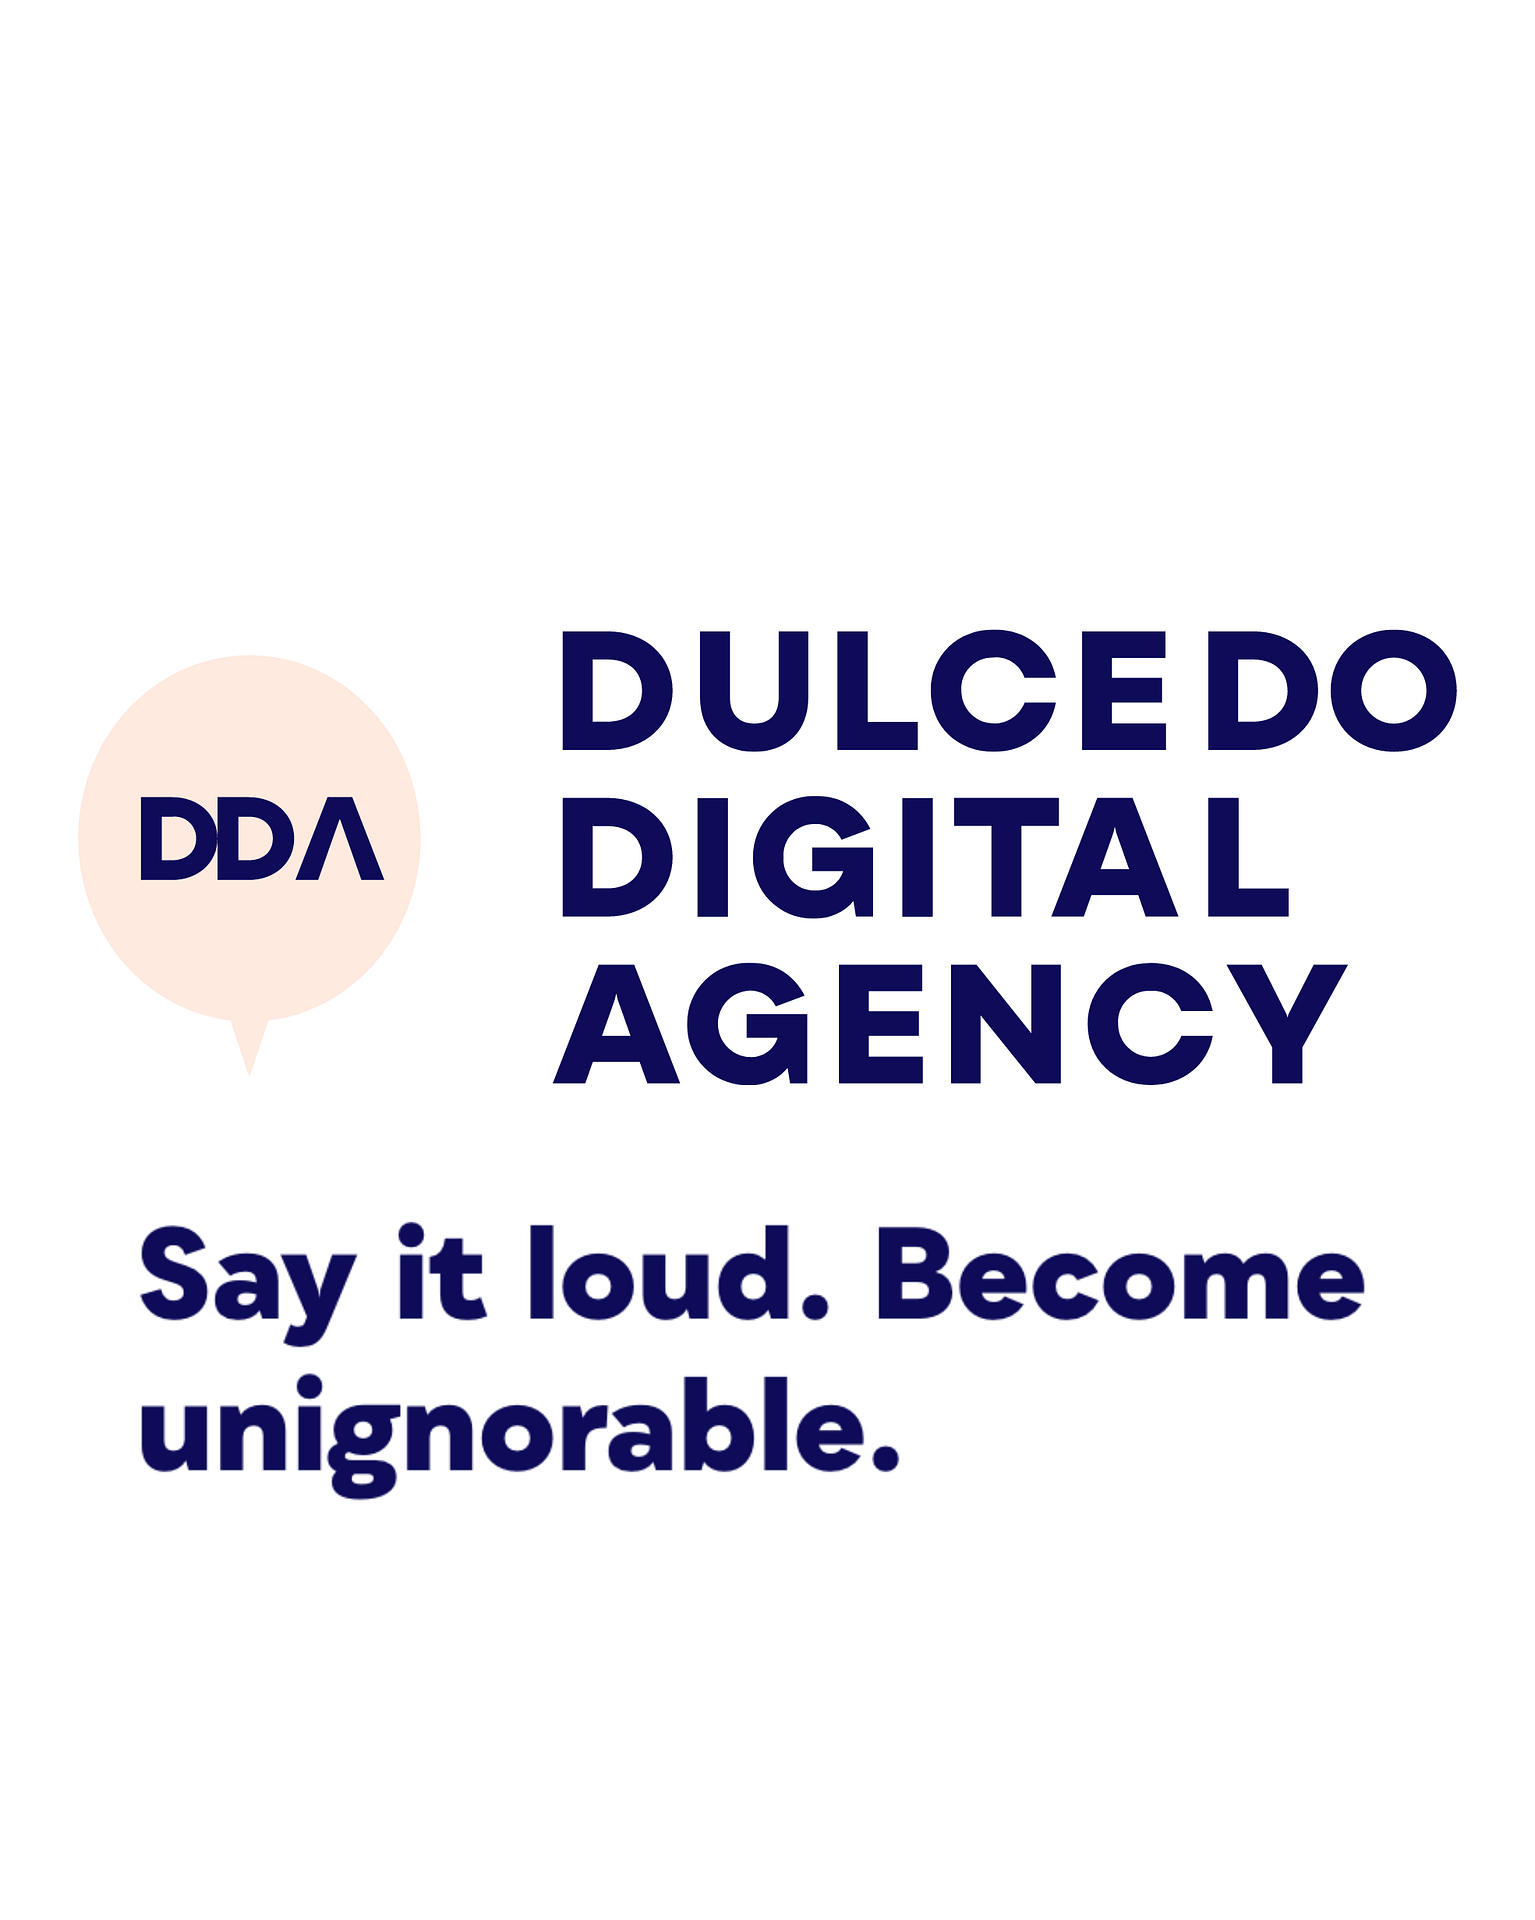 ¡La Agencia Digital Dulcedo ya está aquí!